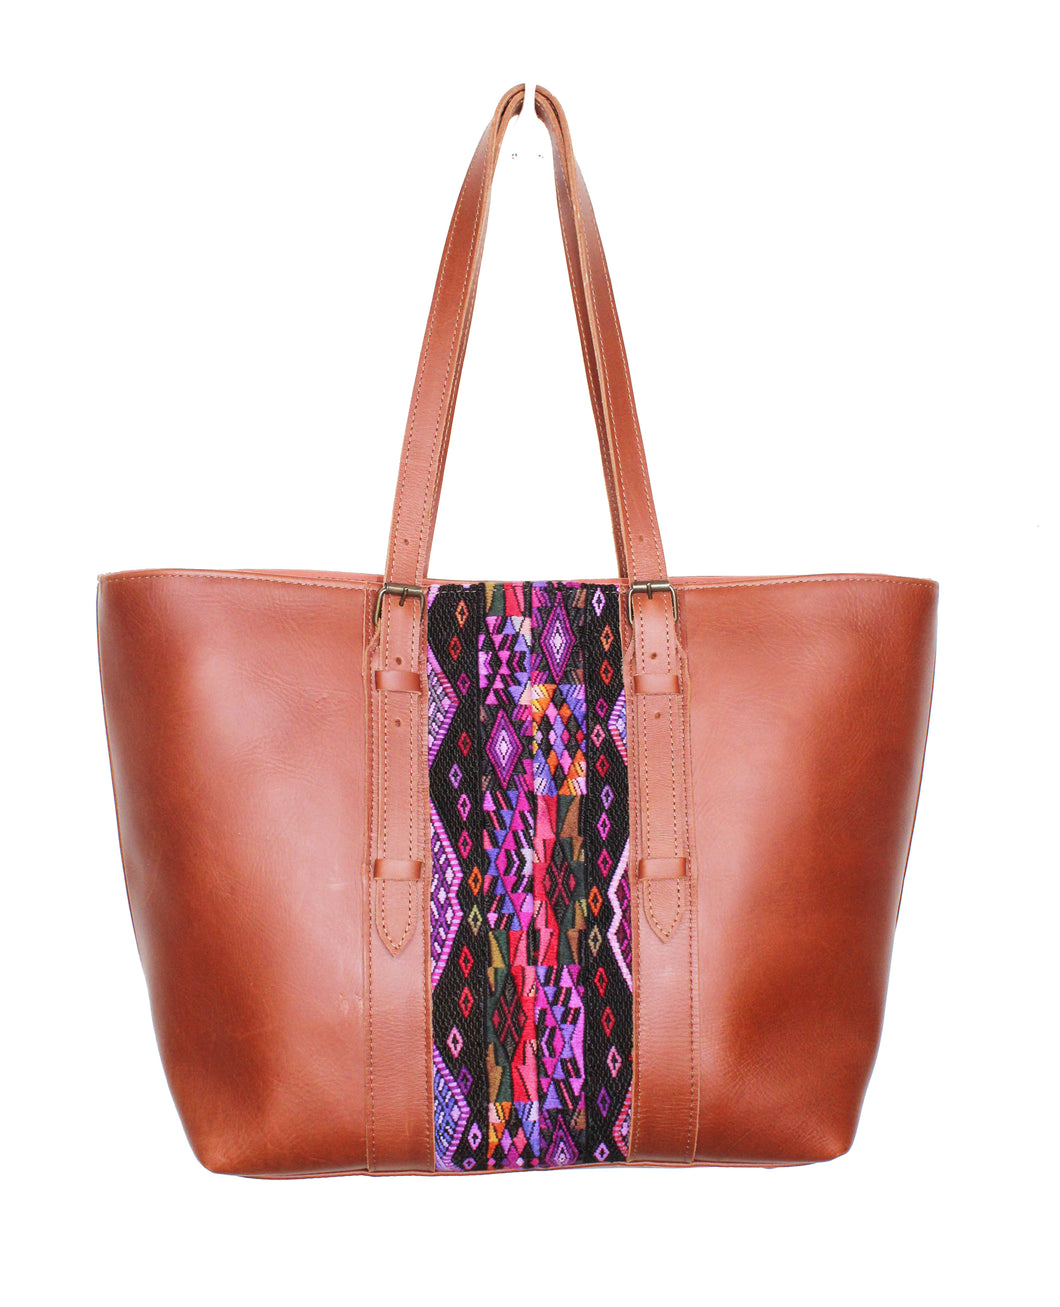 MoonLake Designs Isabella everyday tote bag in reddish brown leather with beautiful geometric huipil